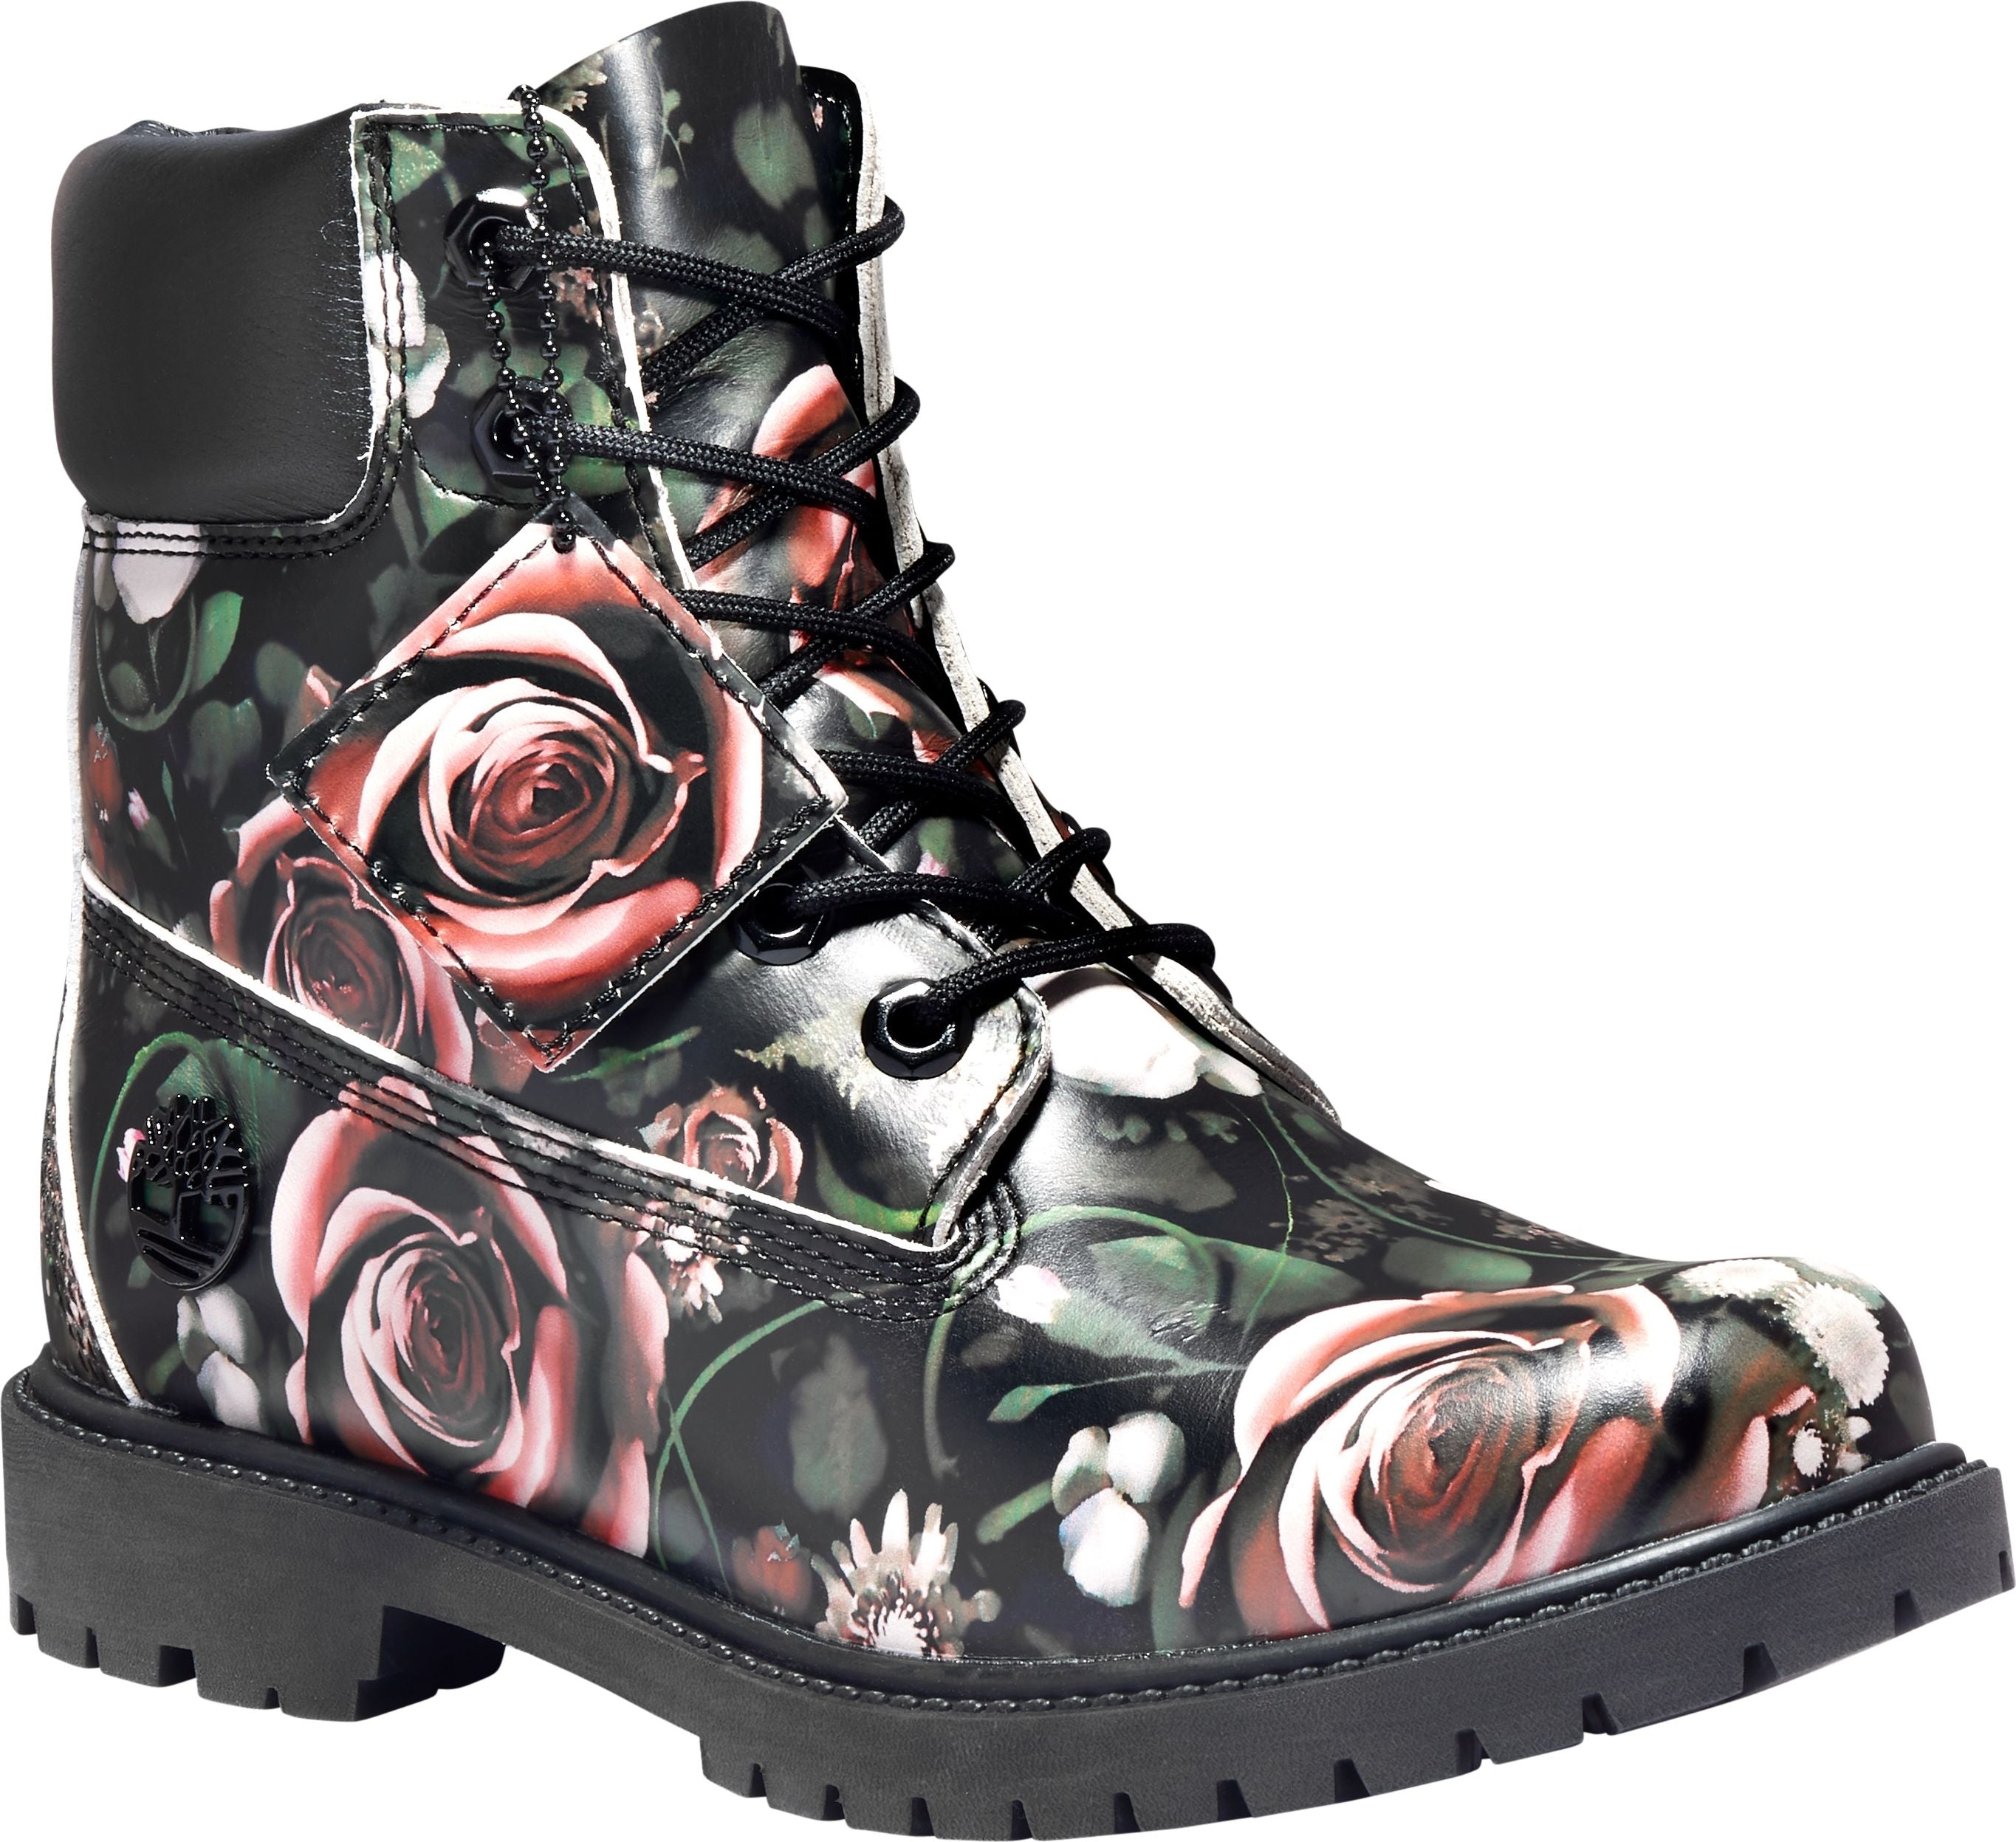 Women's 6inch Waterproof Boot Black Floral